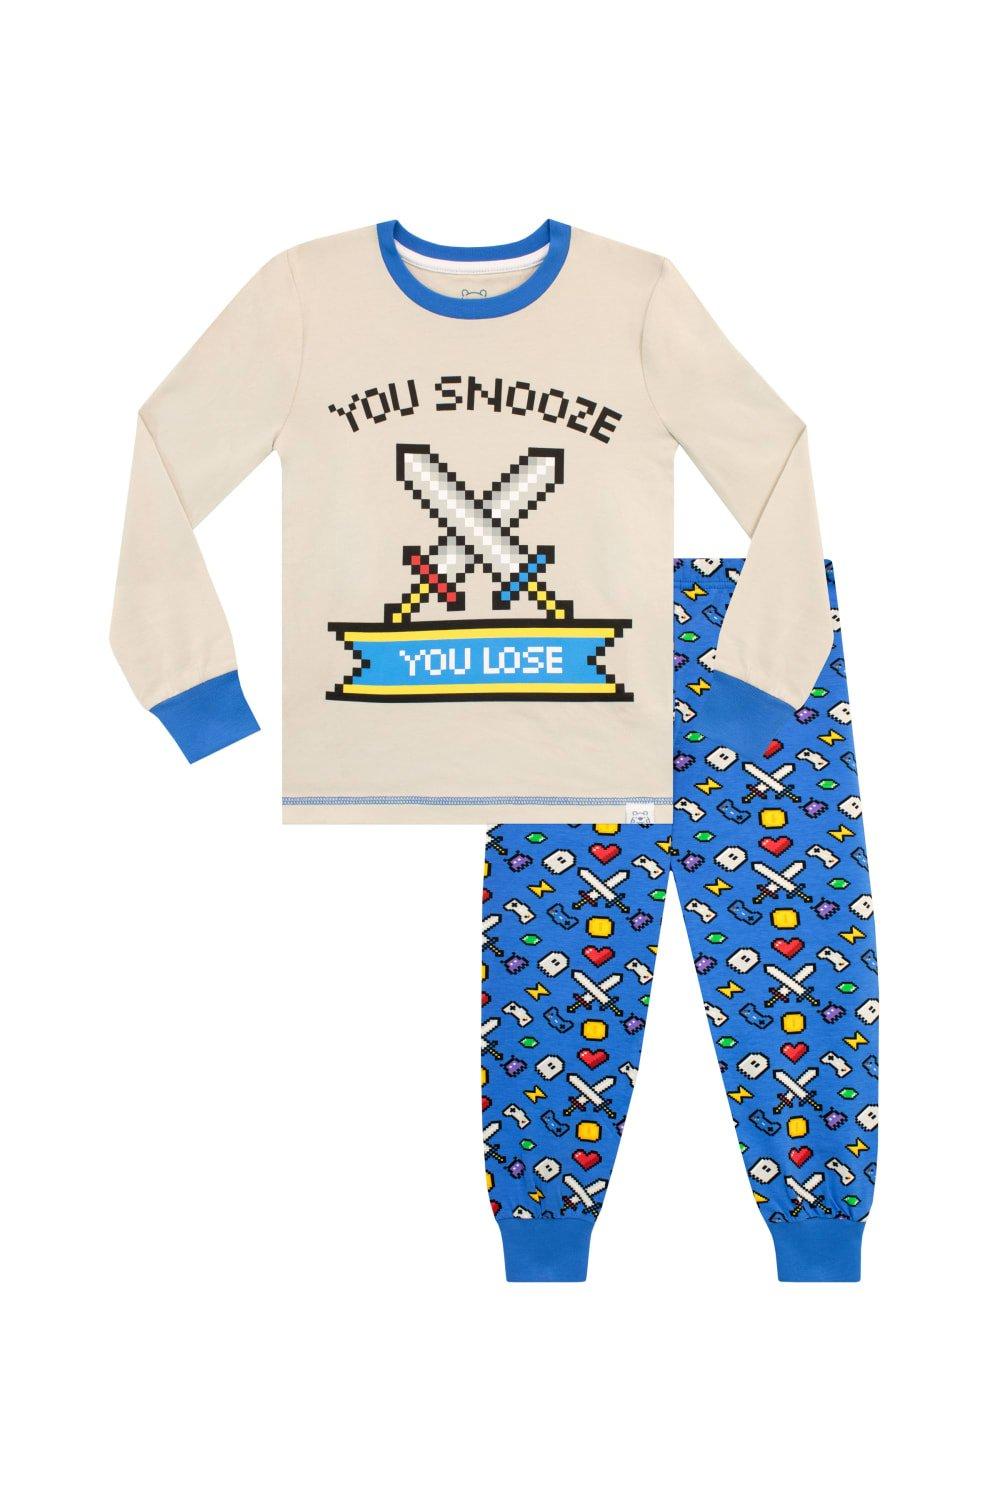 Snooze Lose Gaming Cosy Snuggle Fit Pyjamas